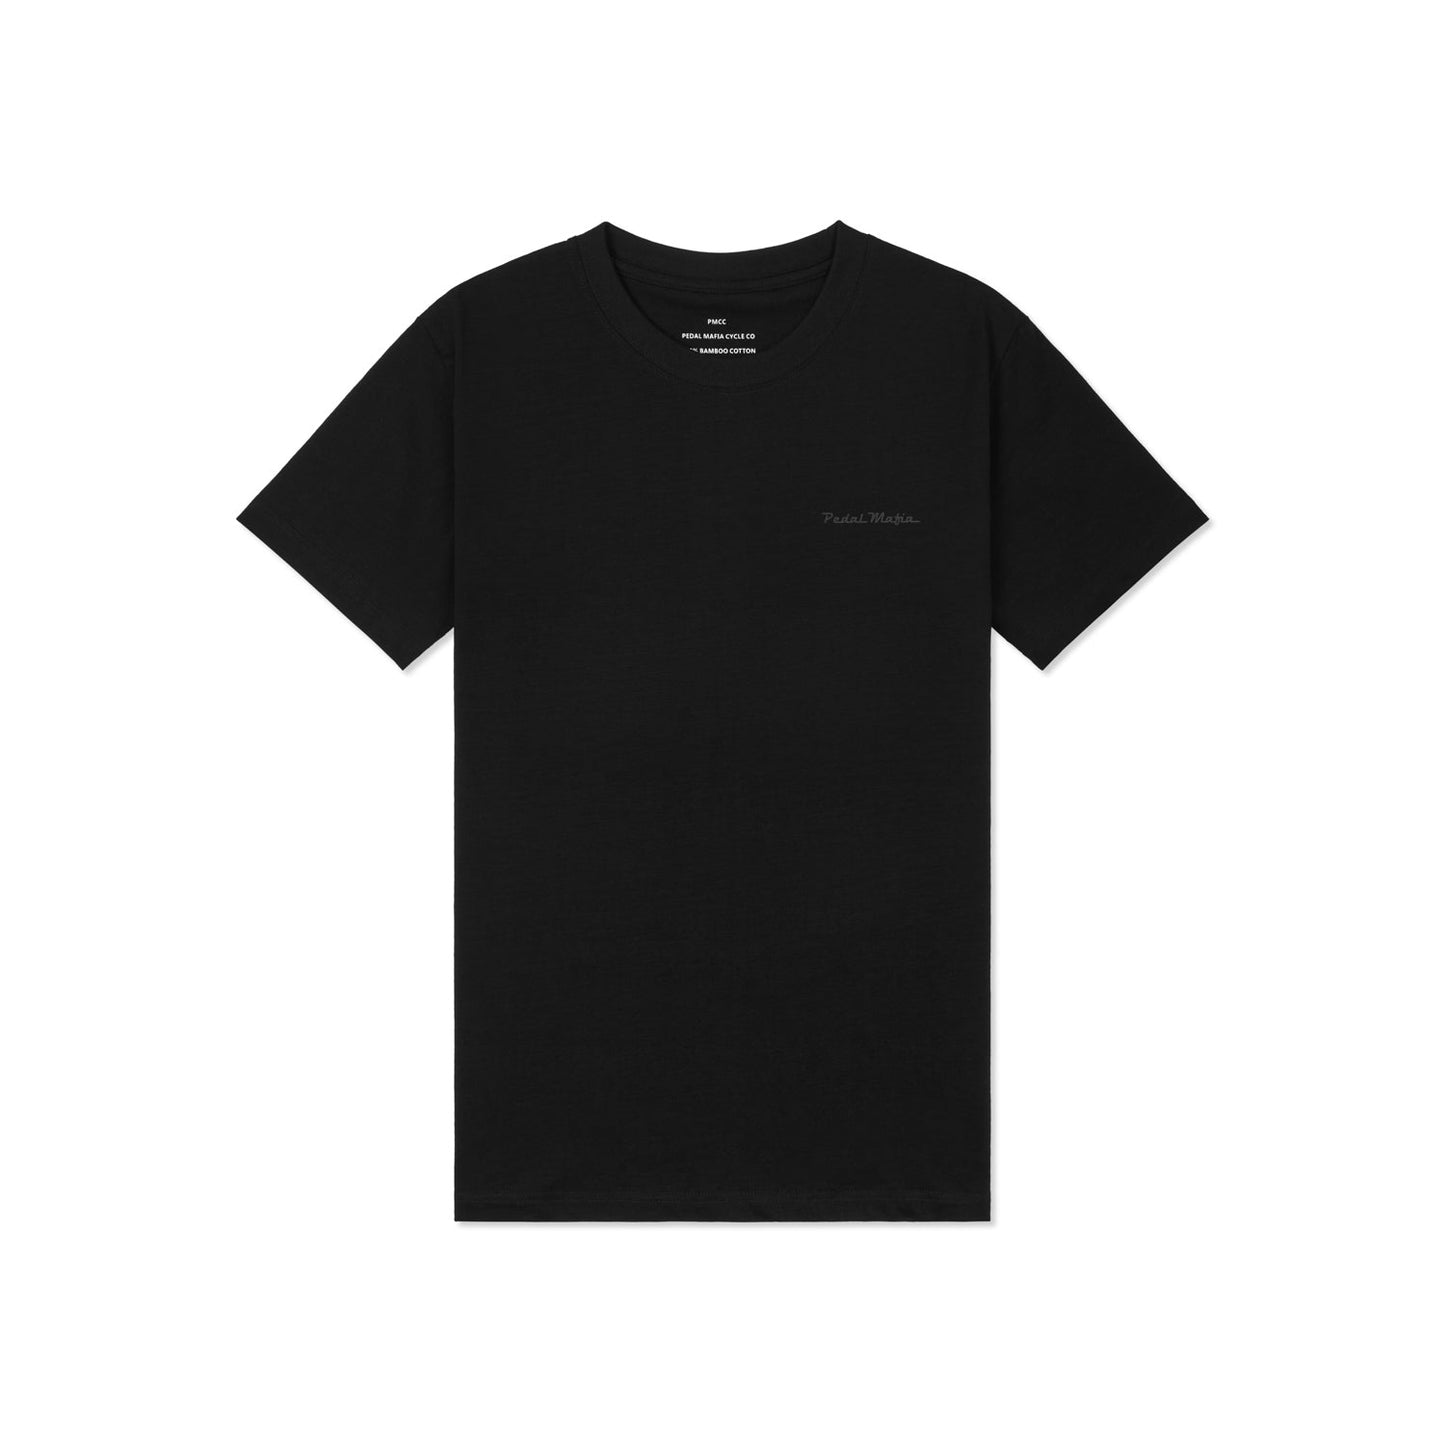 Camiseta De Bambú Reciclado - Negro / Negro